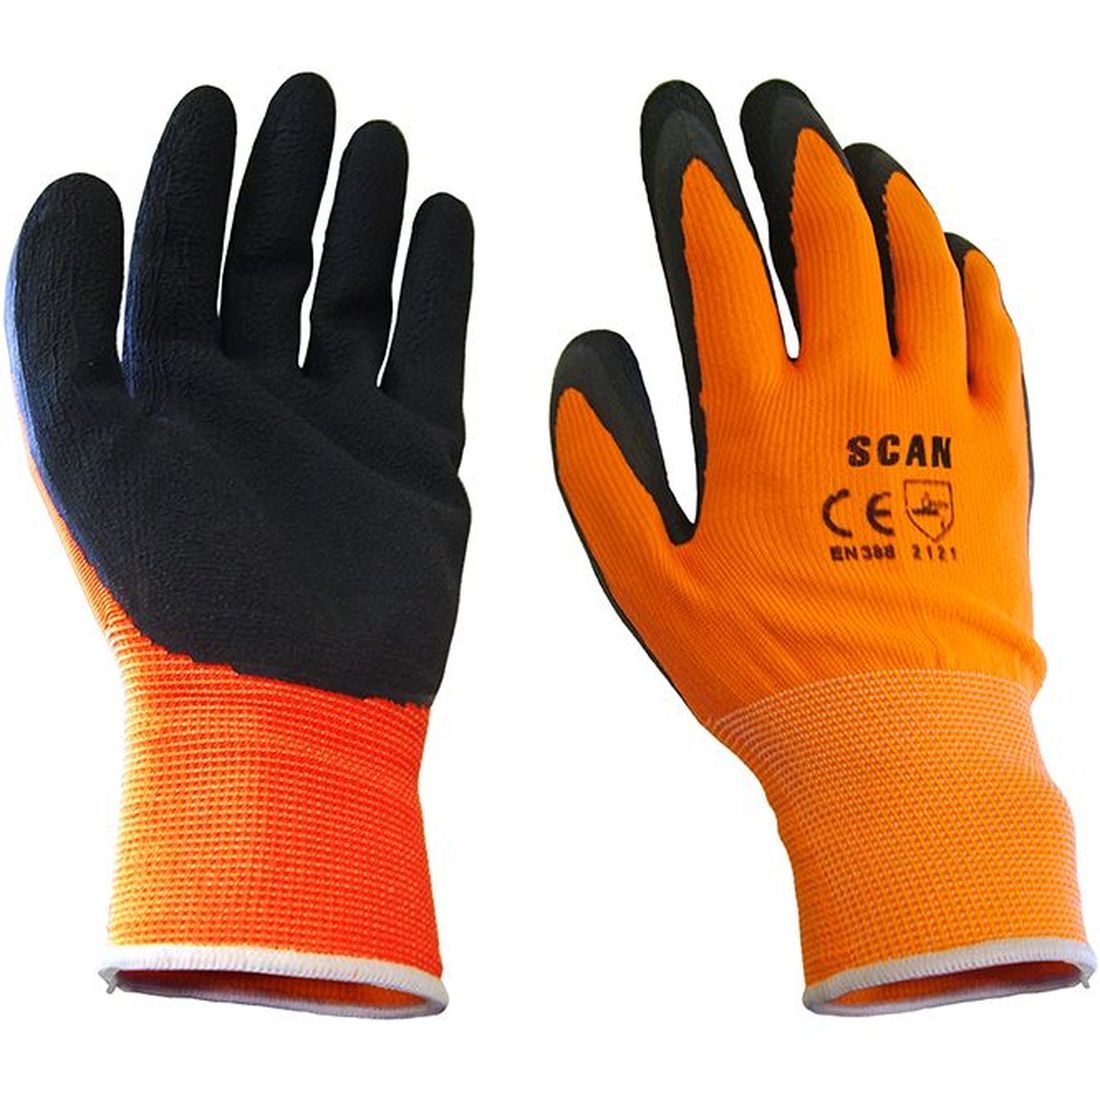 Scan Hi-Vis Orange Foam Latex Coated Gloves - L (Size 9)                             